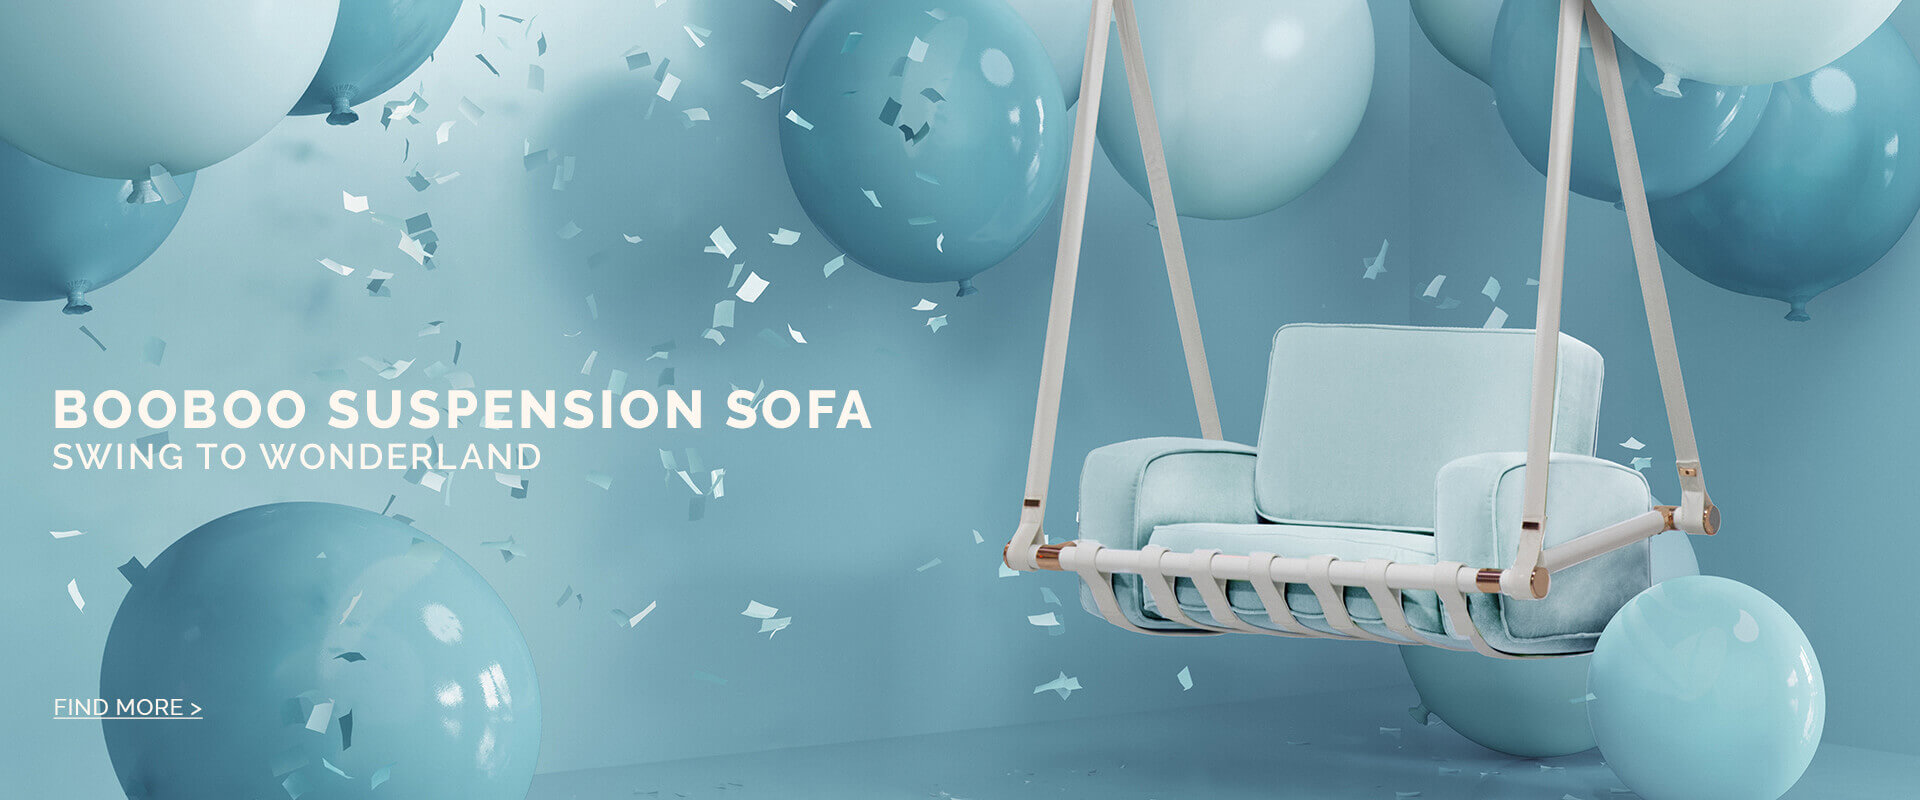 Booboo Suspension Sofa Circu Magical Furniture